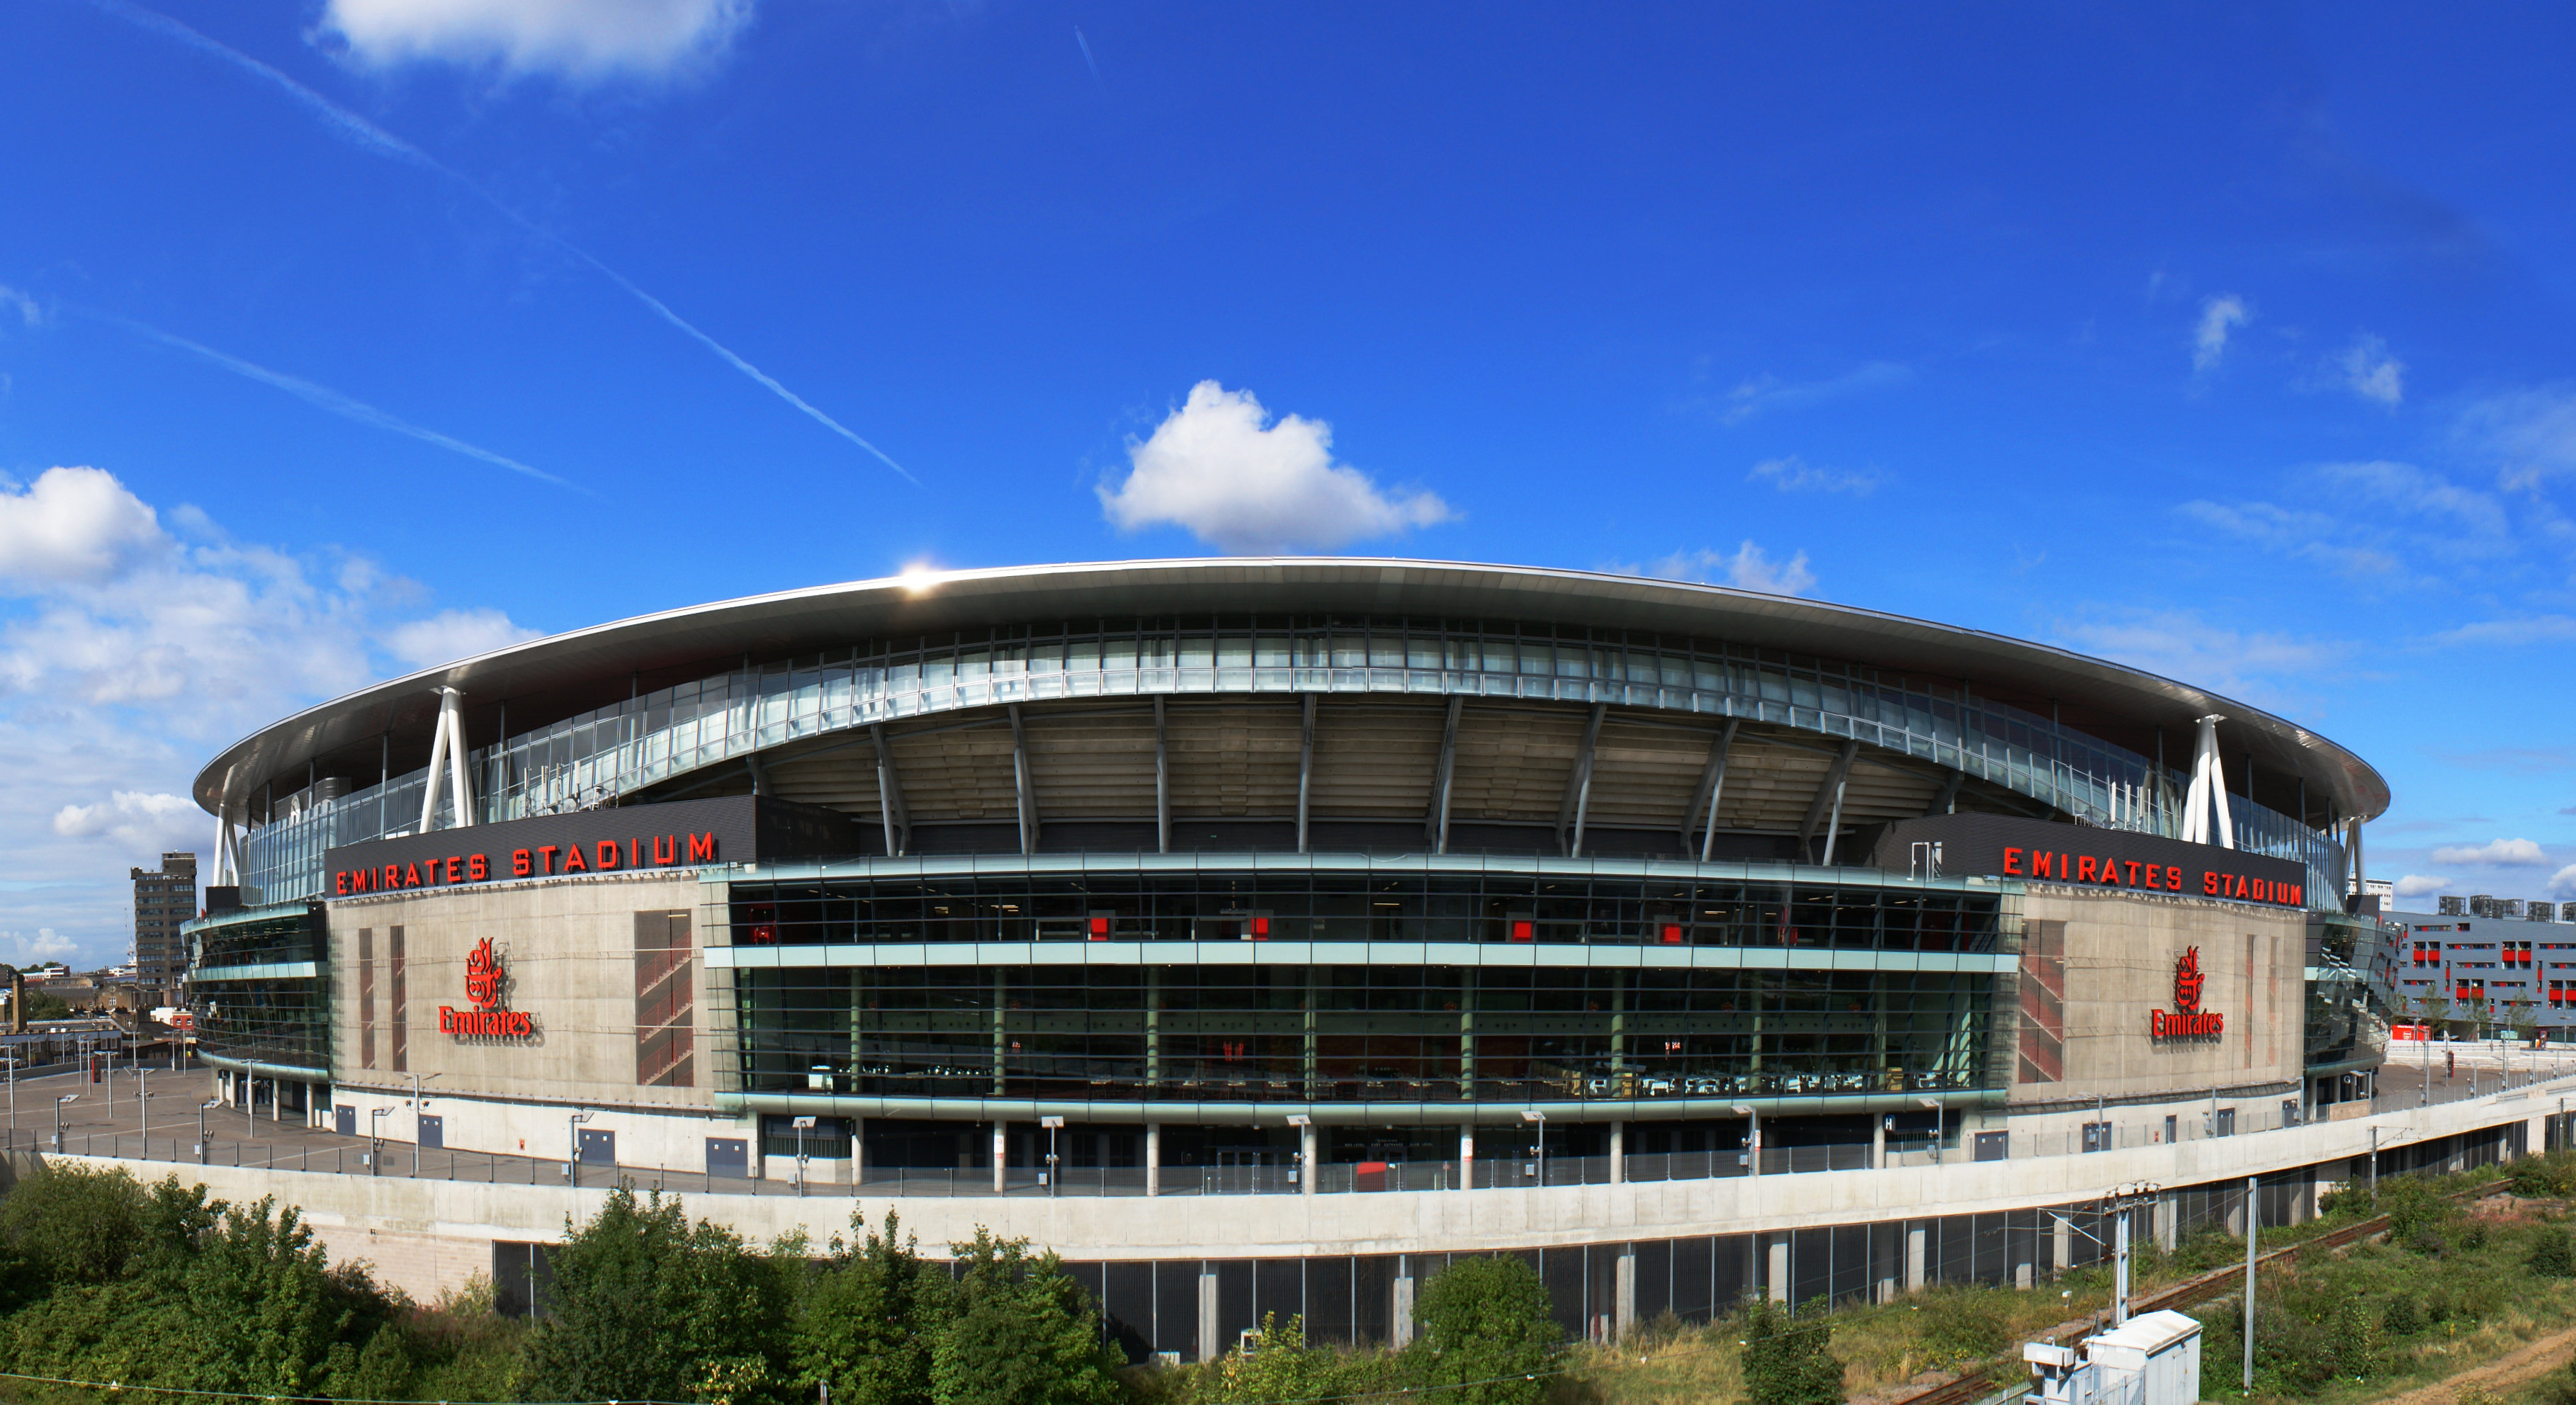 Visit The Emirates Stadium The Headquarters Of Arsenal Fc Traveldigg Com